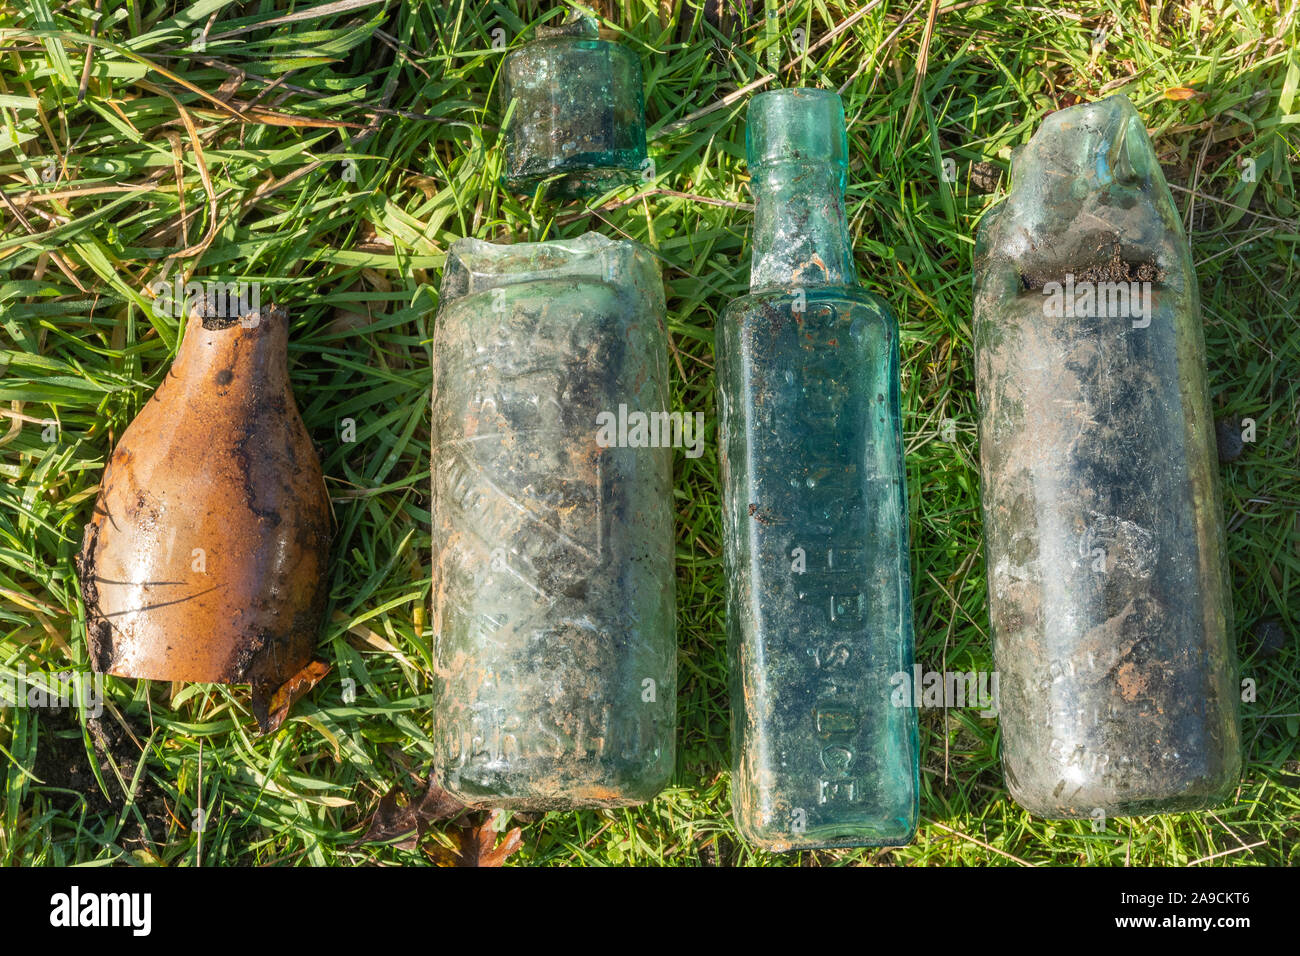 Vintage bottles arranged on the grass at an old bottle dump, UK Stock Photo